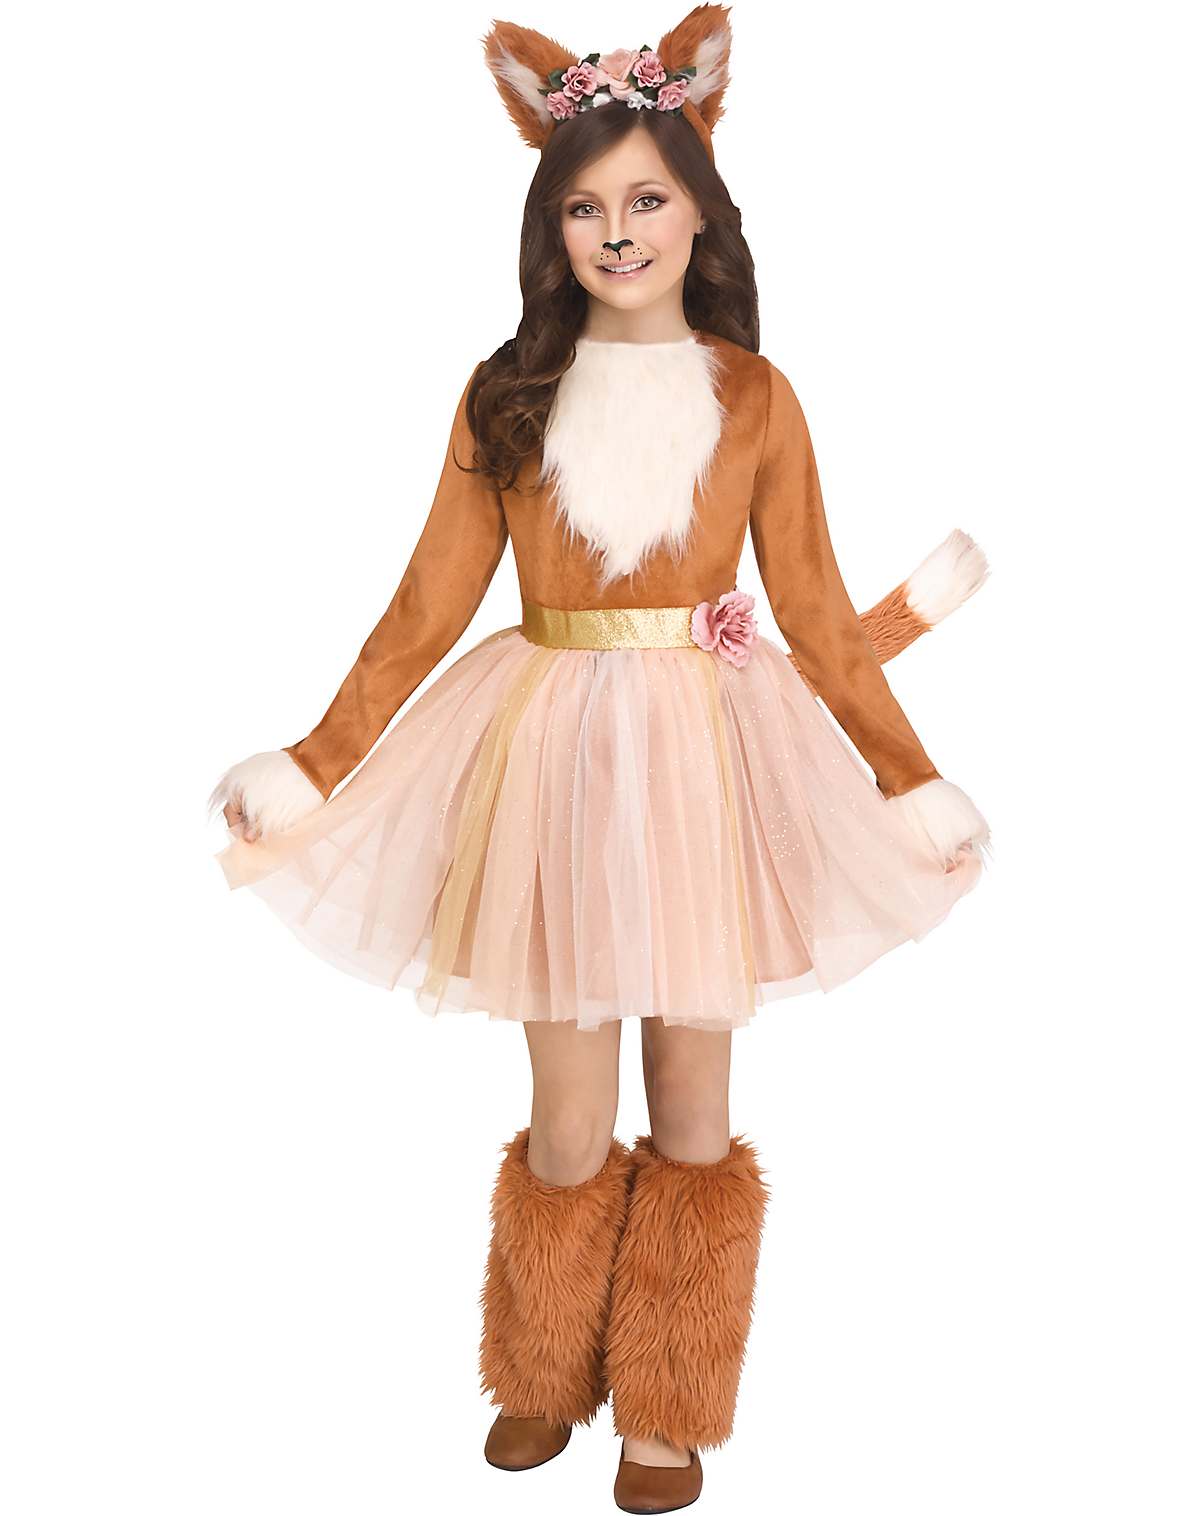 Kids Fox Costume